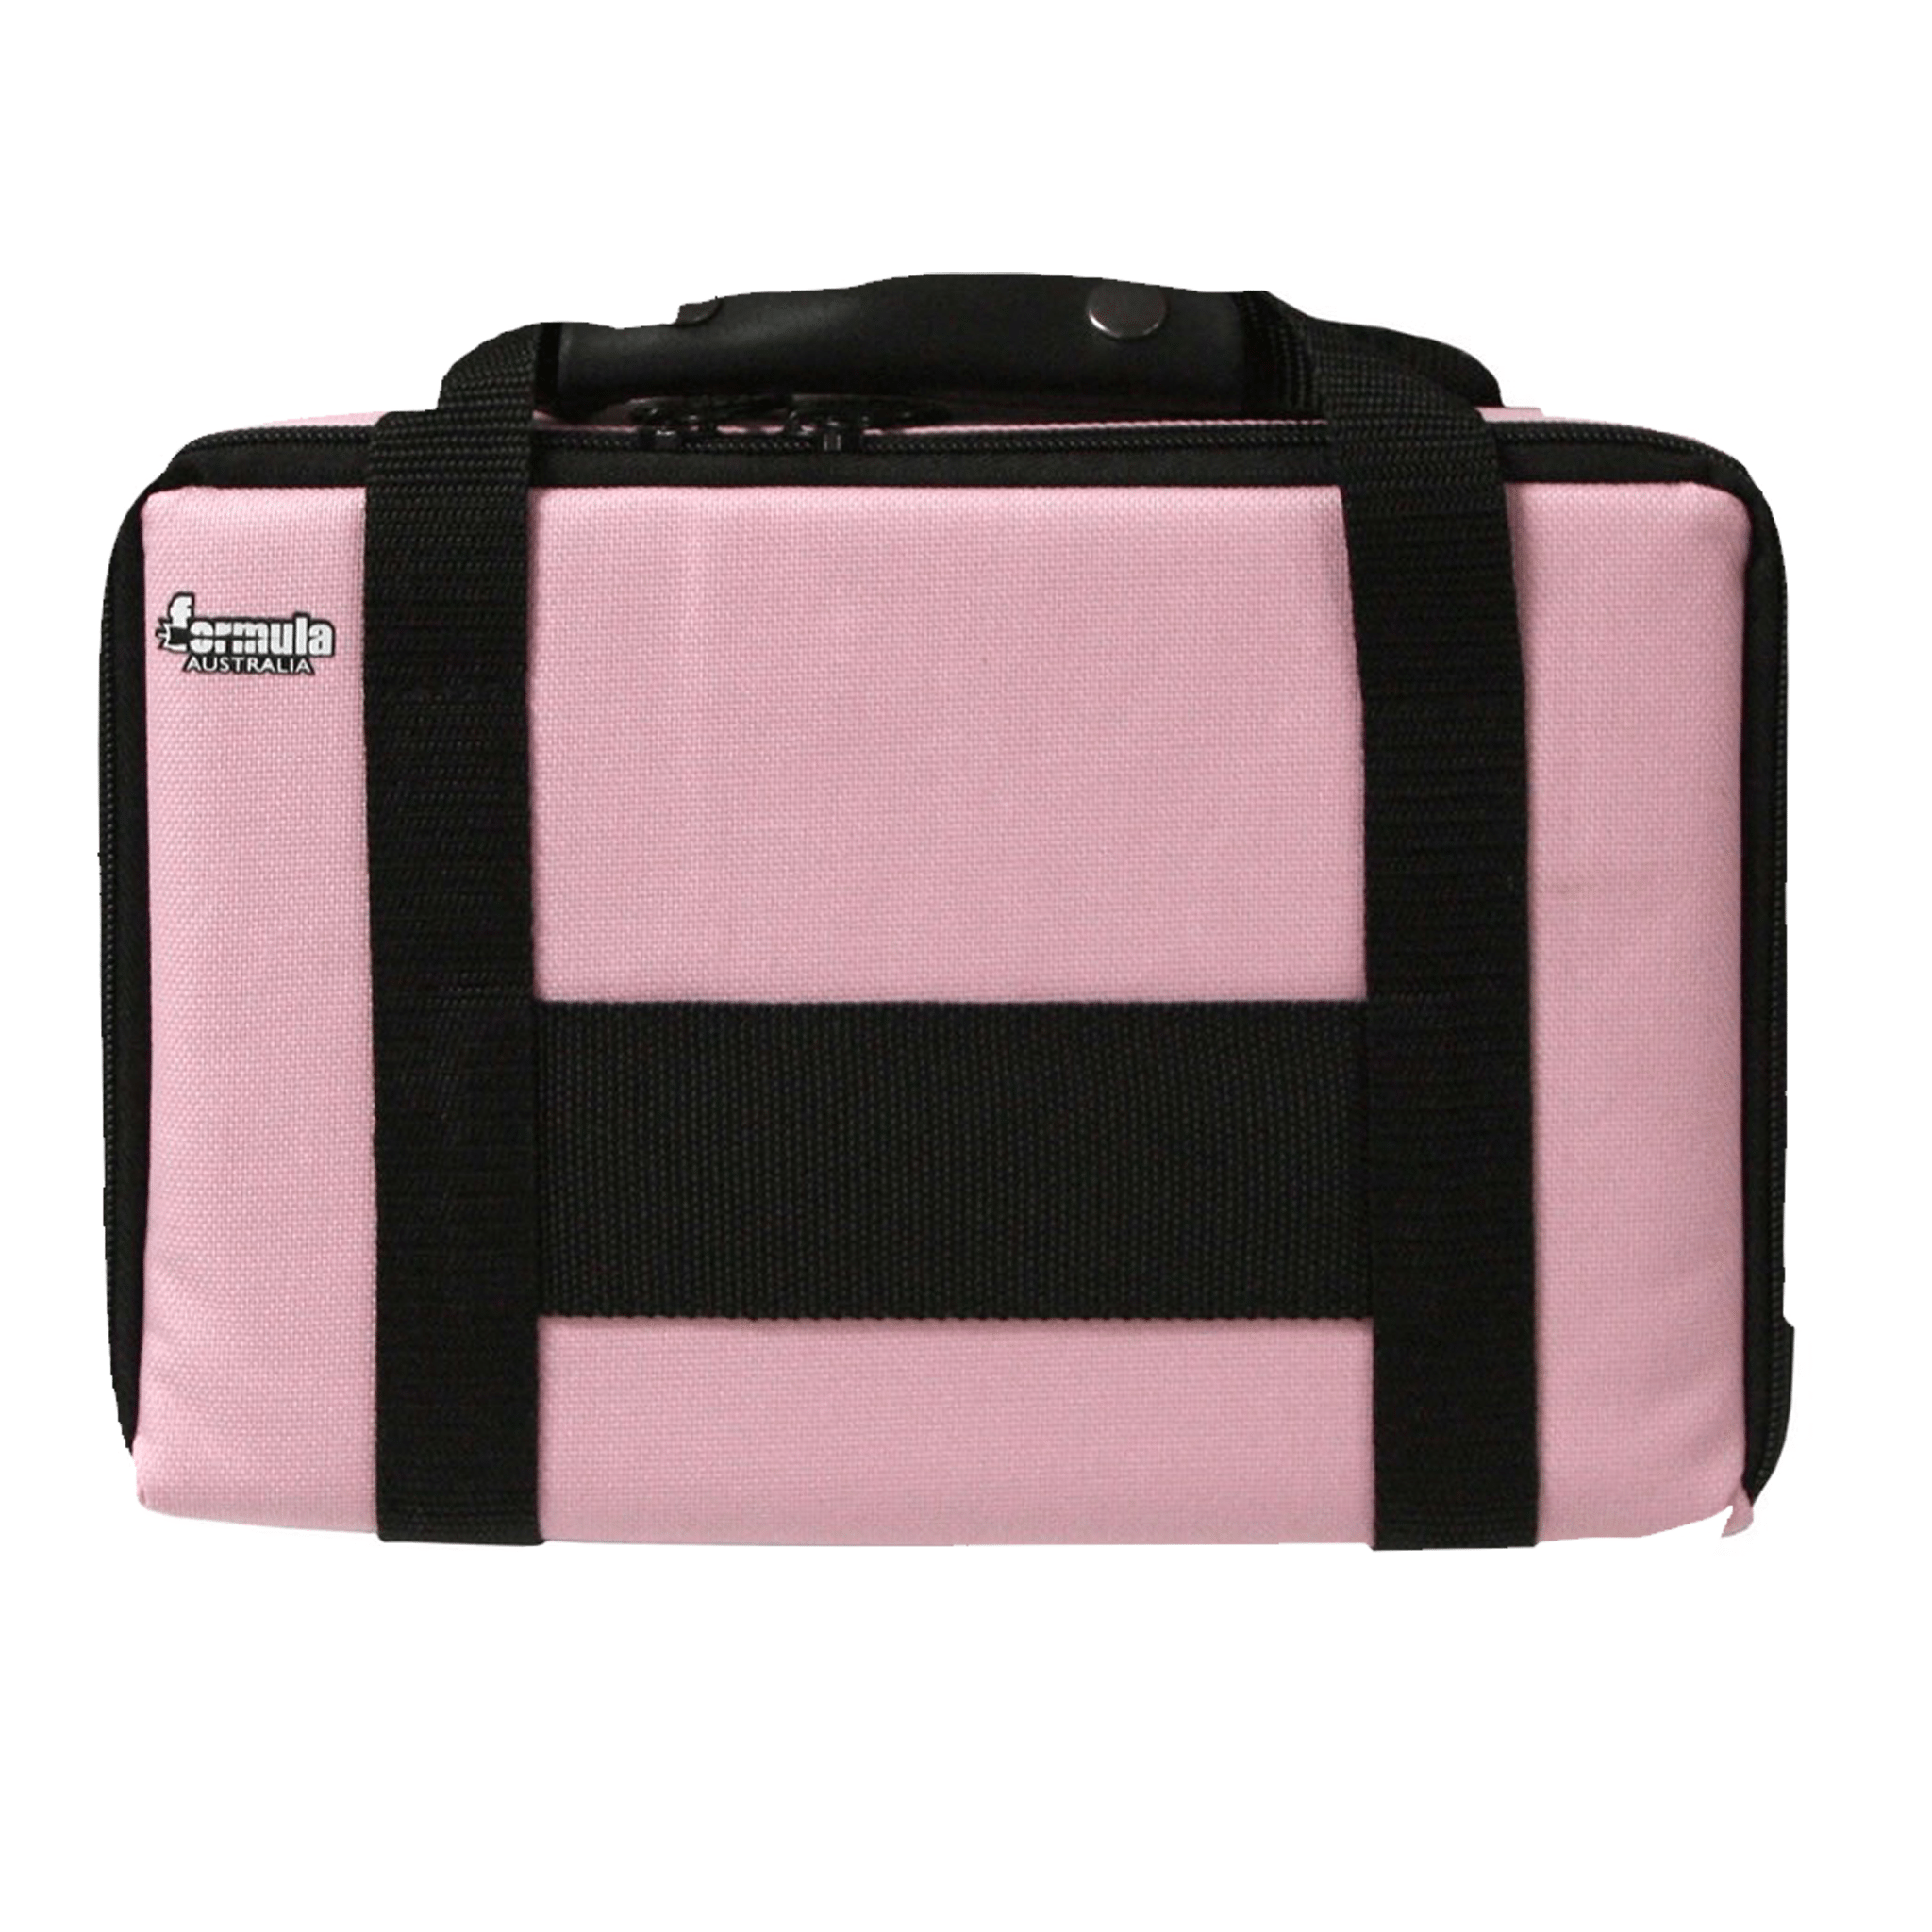 Harrows Multipack Darts Case Pink Cases